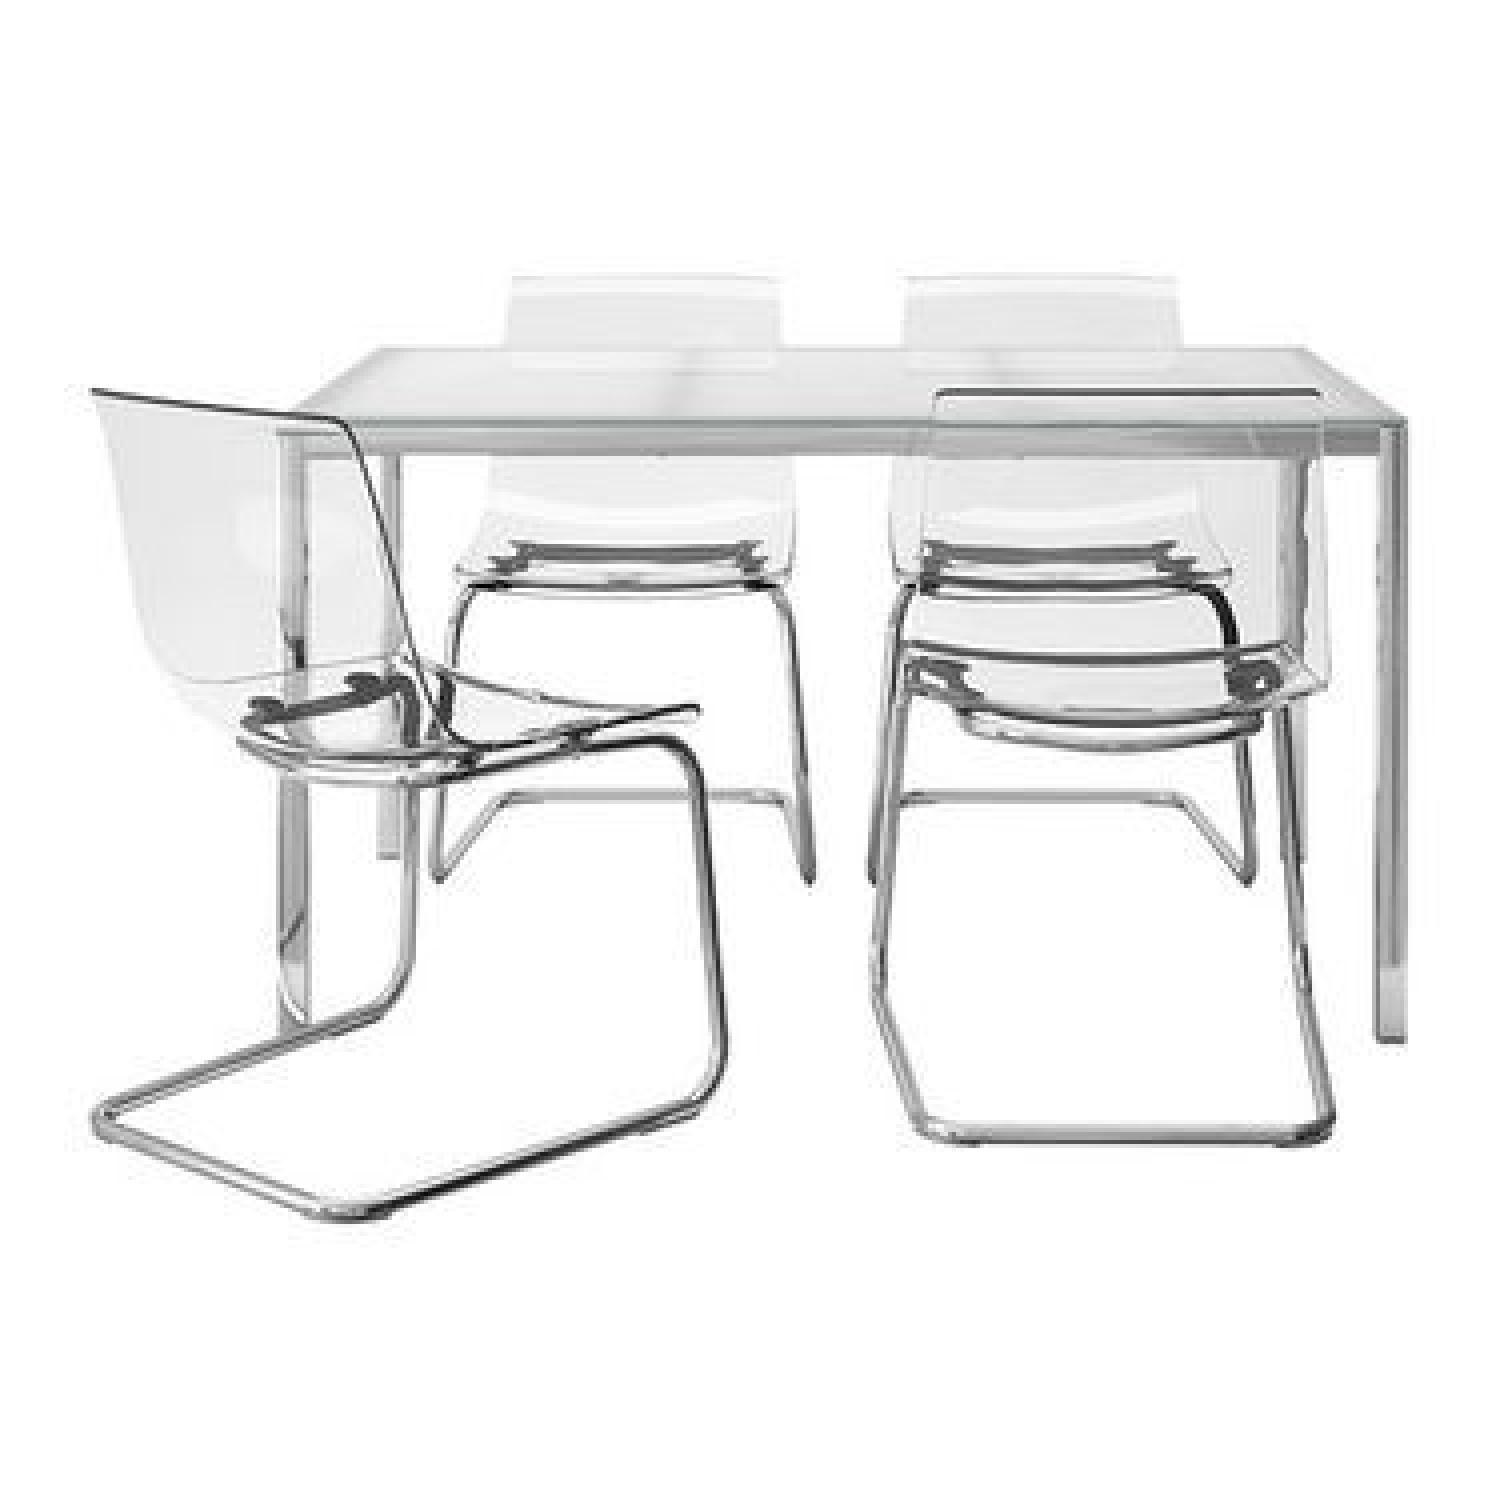 Torsby торсби стол хромированный глянцевый белый 135x85 см